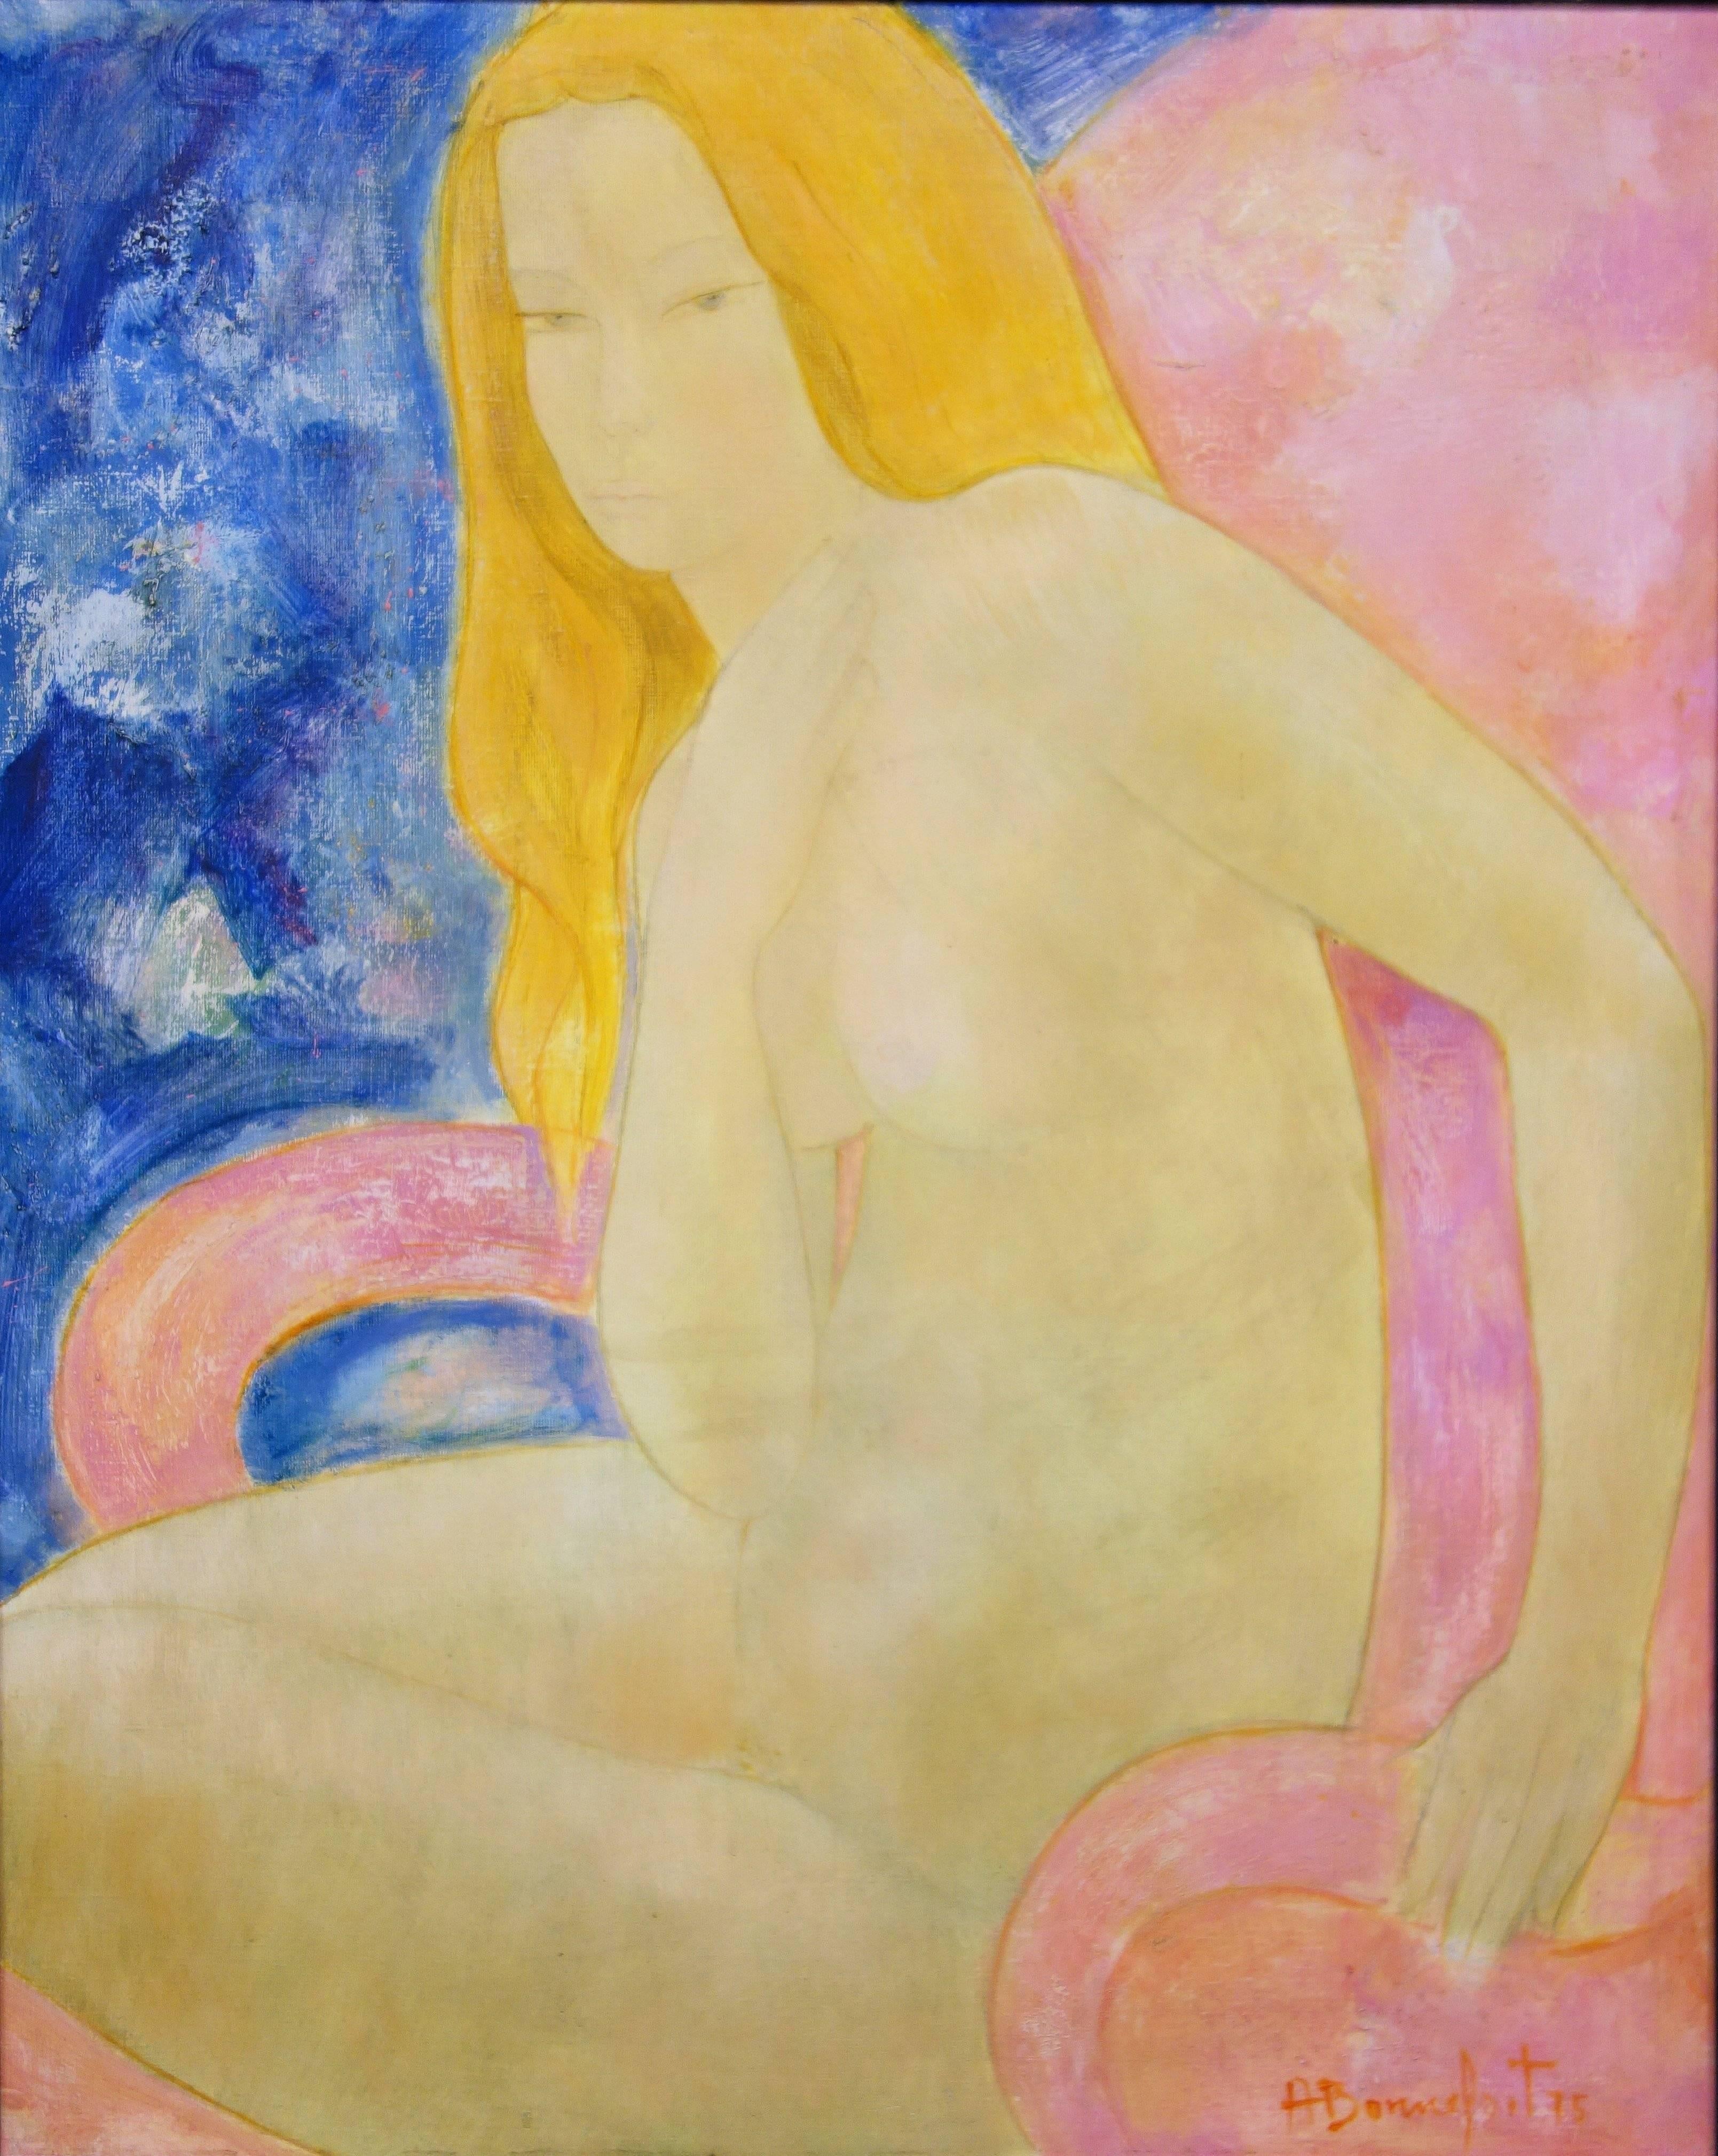 Alain Bonnefoit Nude Painting – Jeanne auf einem Stuhl - Original Ölgemälde - Signiert